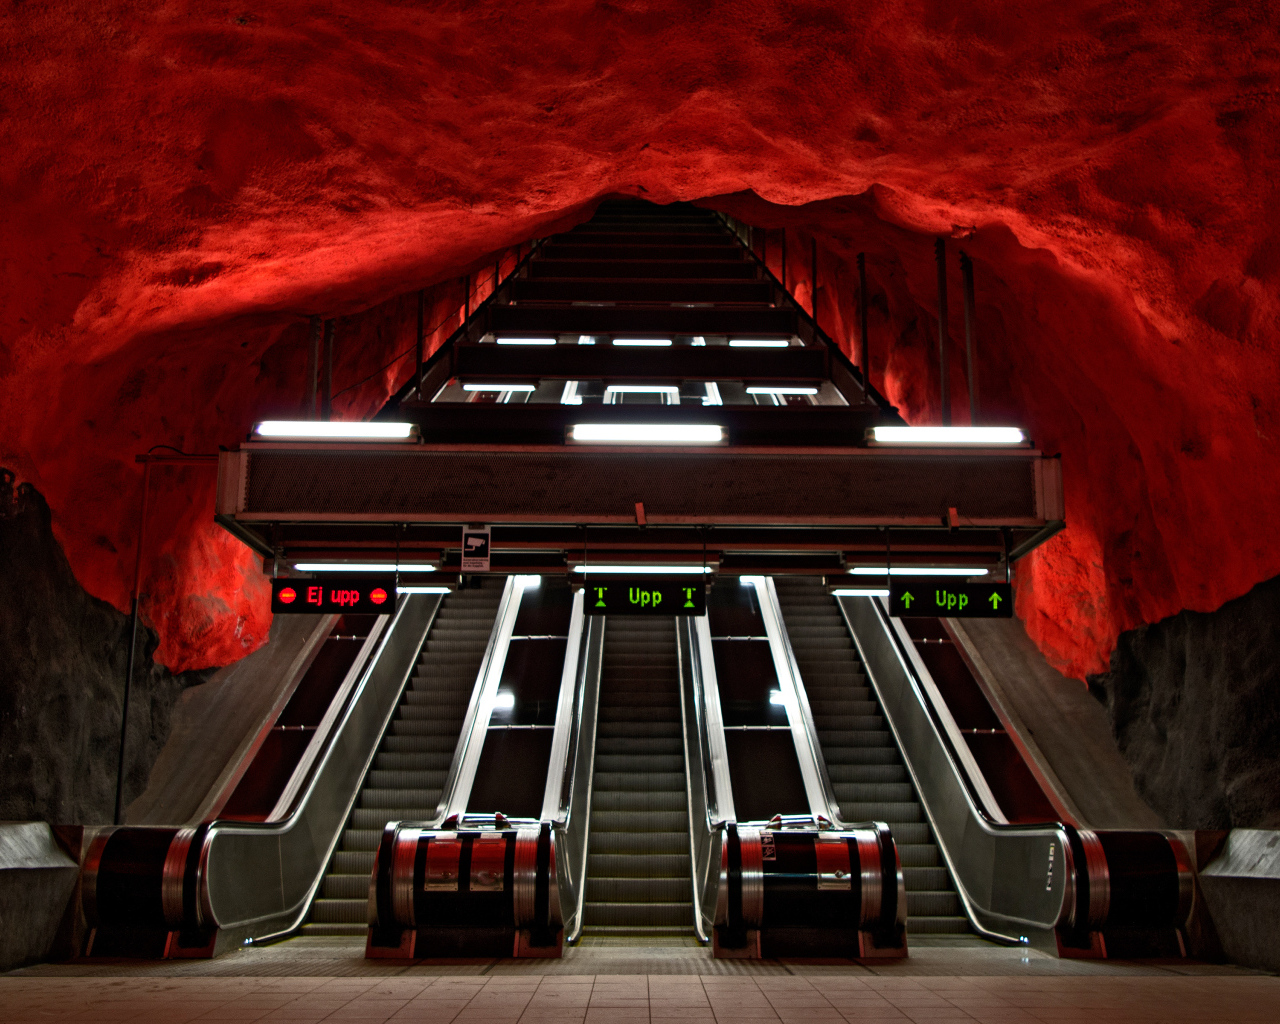 Станция метро в Стокгольме, Швеция